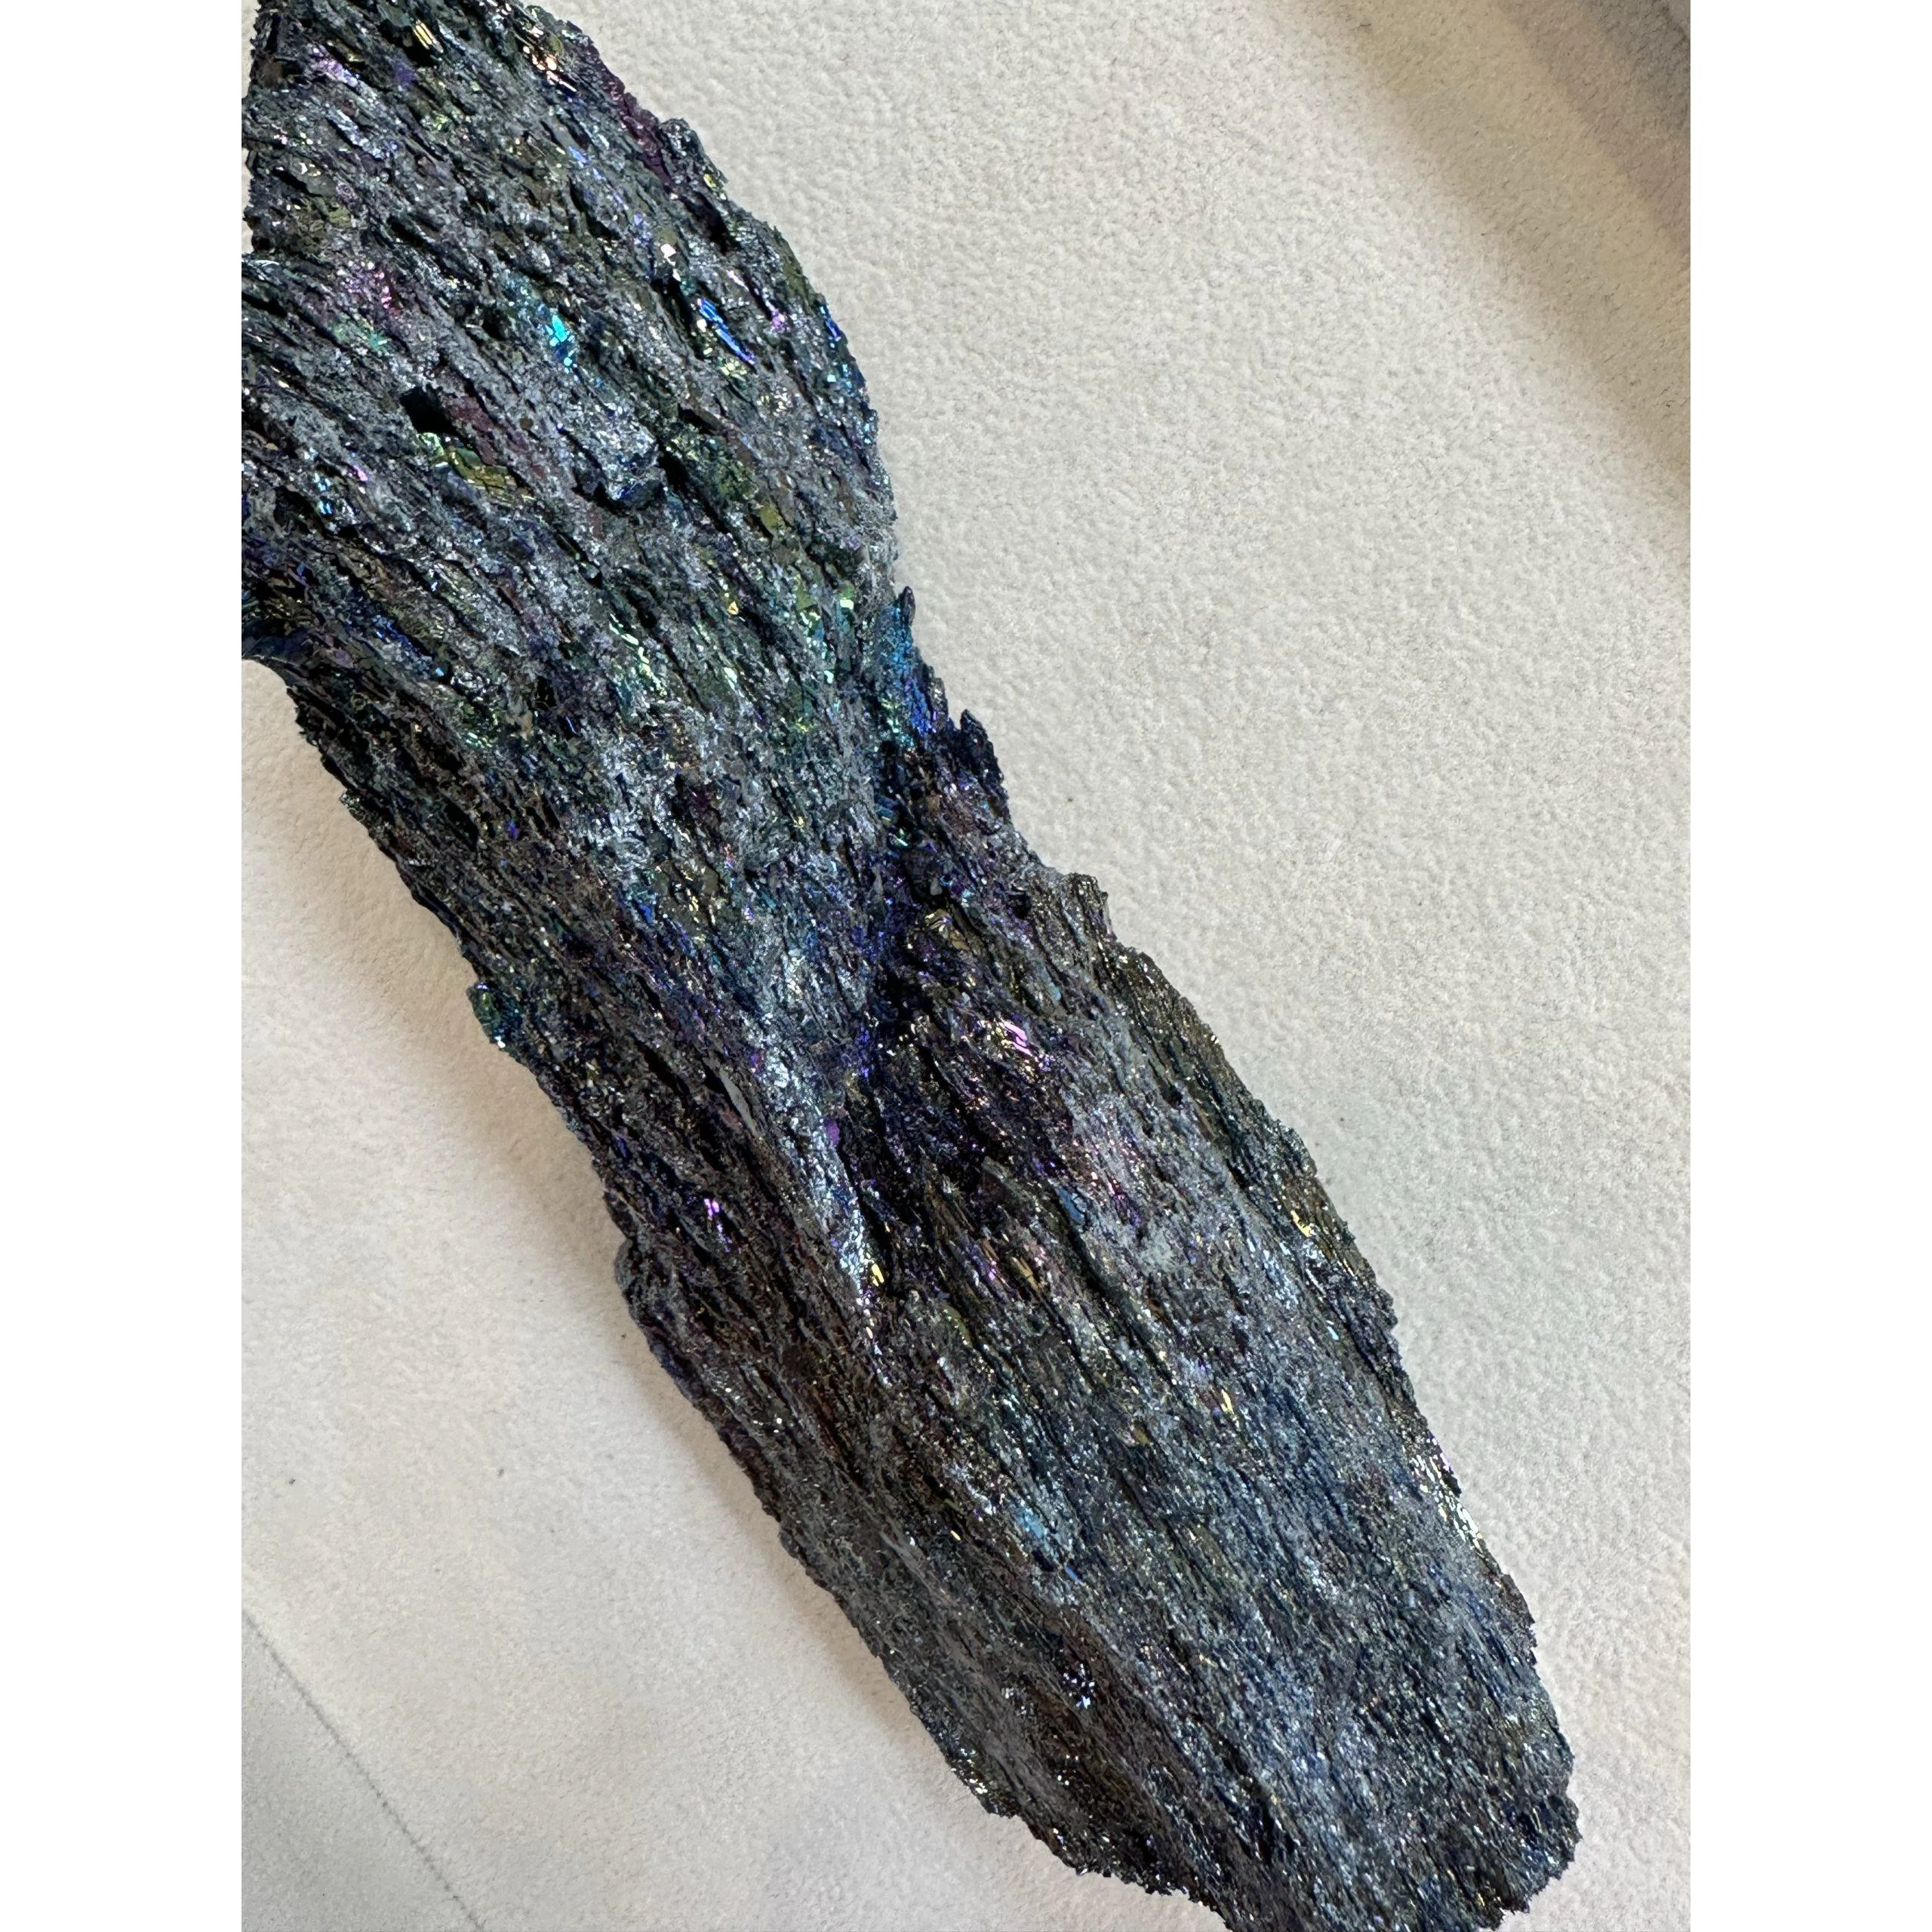 Silica Carbide Rough –  6 1/2 – 8 inch Prehistoric Online